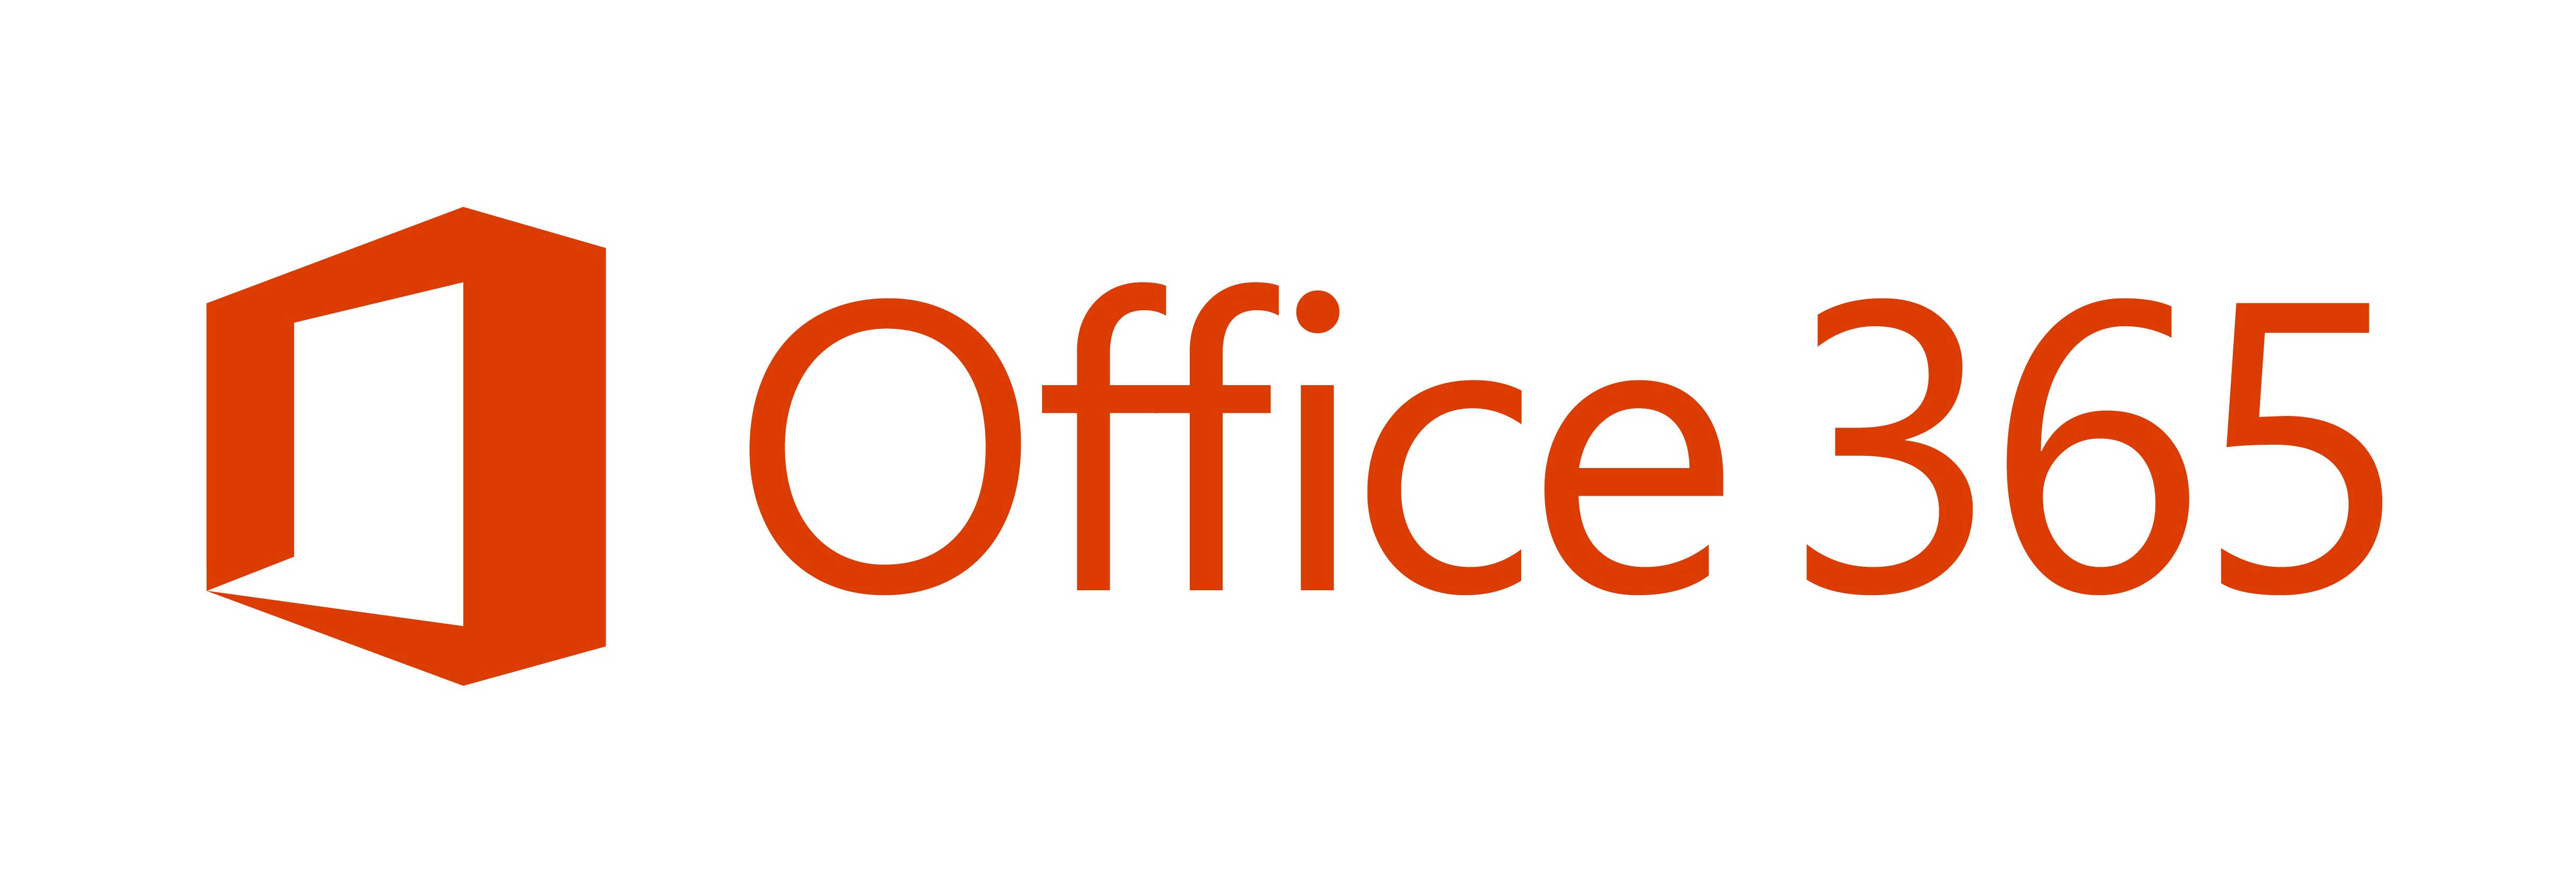 Office 365 Business Support - Partner Logo 1